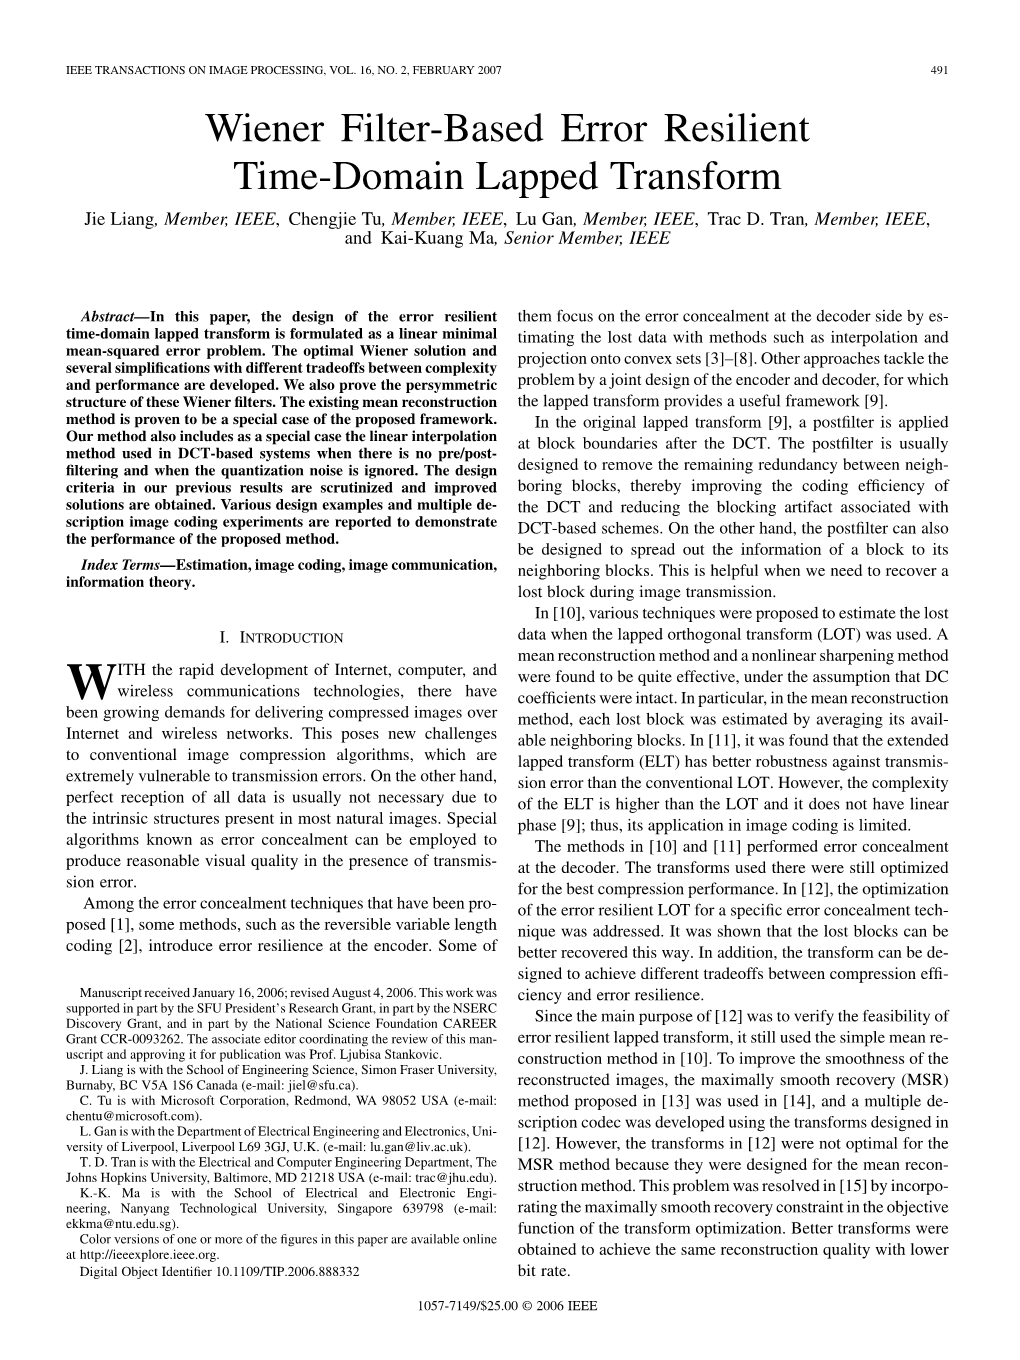 Wiener Filter-Based Error Resilient Time-Domain Lapped Transform Jie Liang, Member, IEEE, Chengjie Tu, Member, IEEE, Lu Gan, Member, IEEE, Trac D